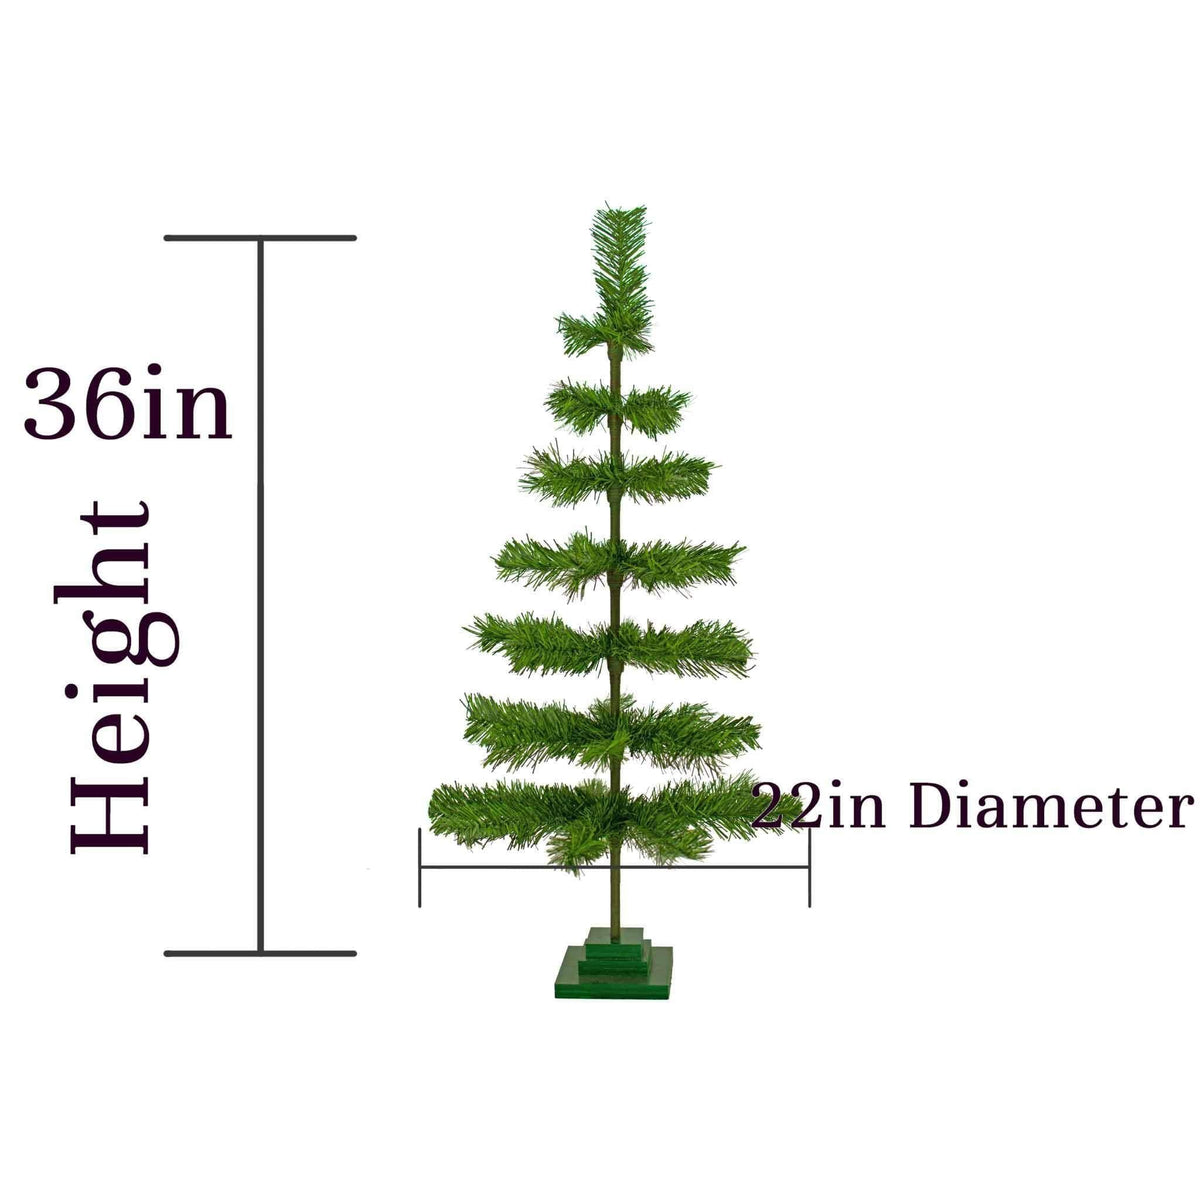 Specs of Lee Display's 36in Alpine Green Tinsel Tree